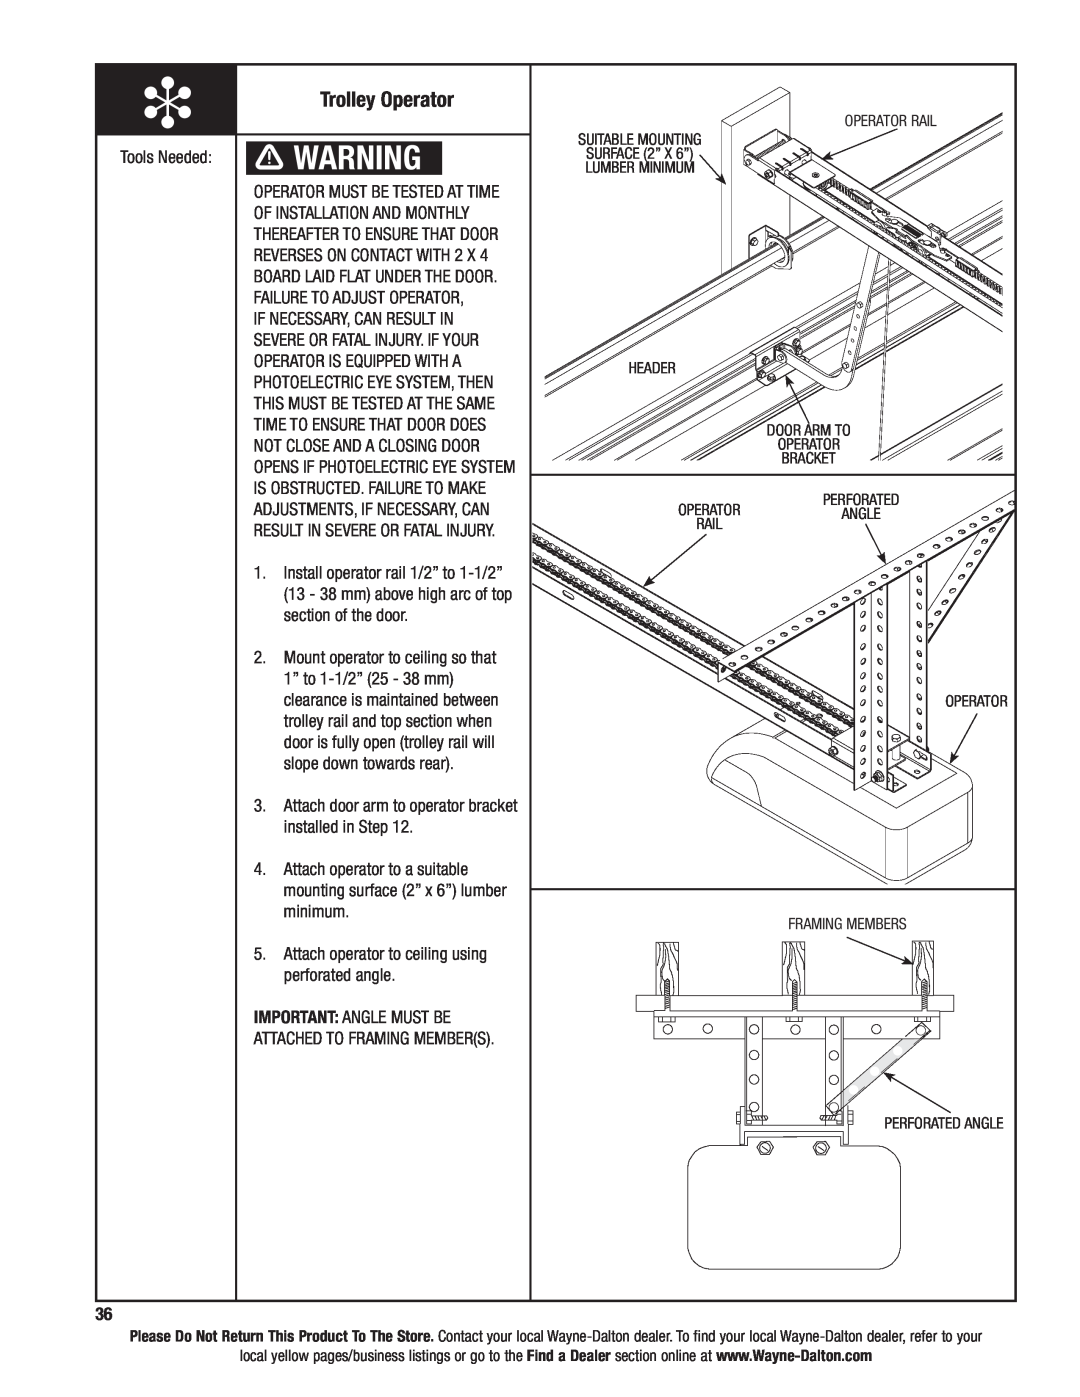 Wayne-Dalton 9600 installation instructions Trolley Operator 